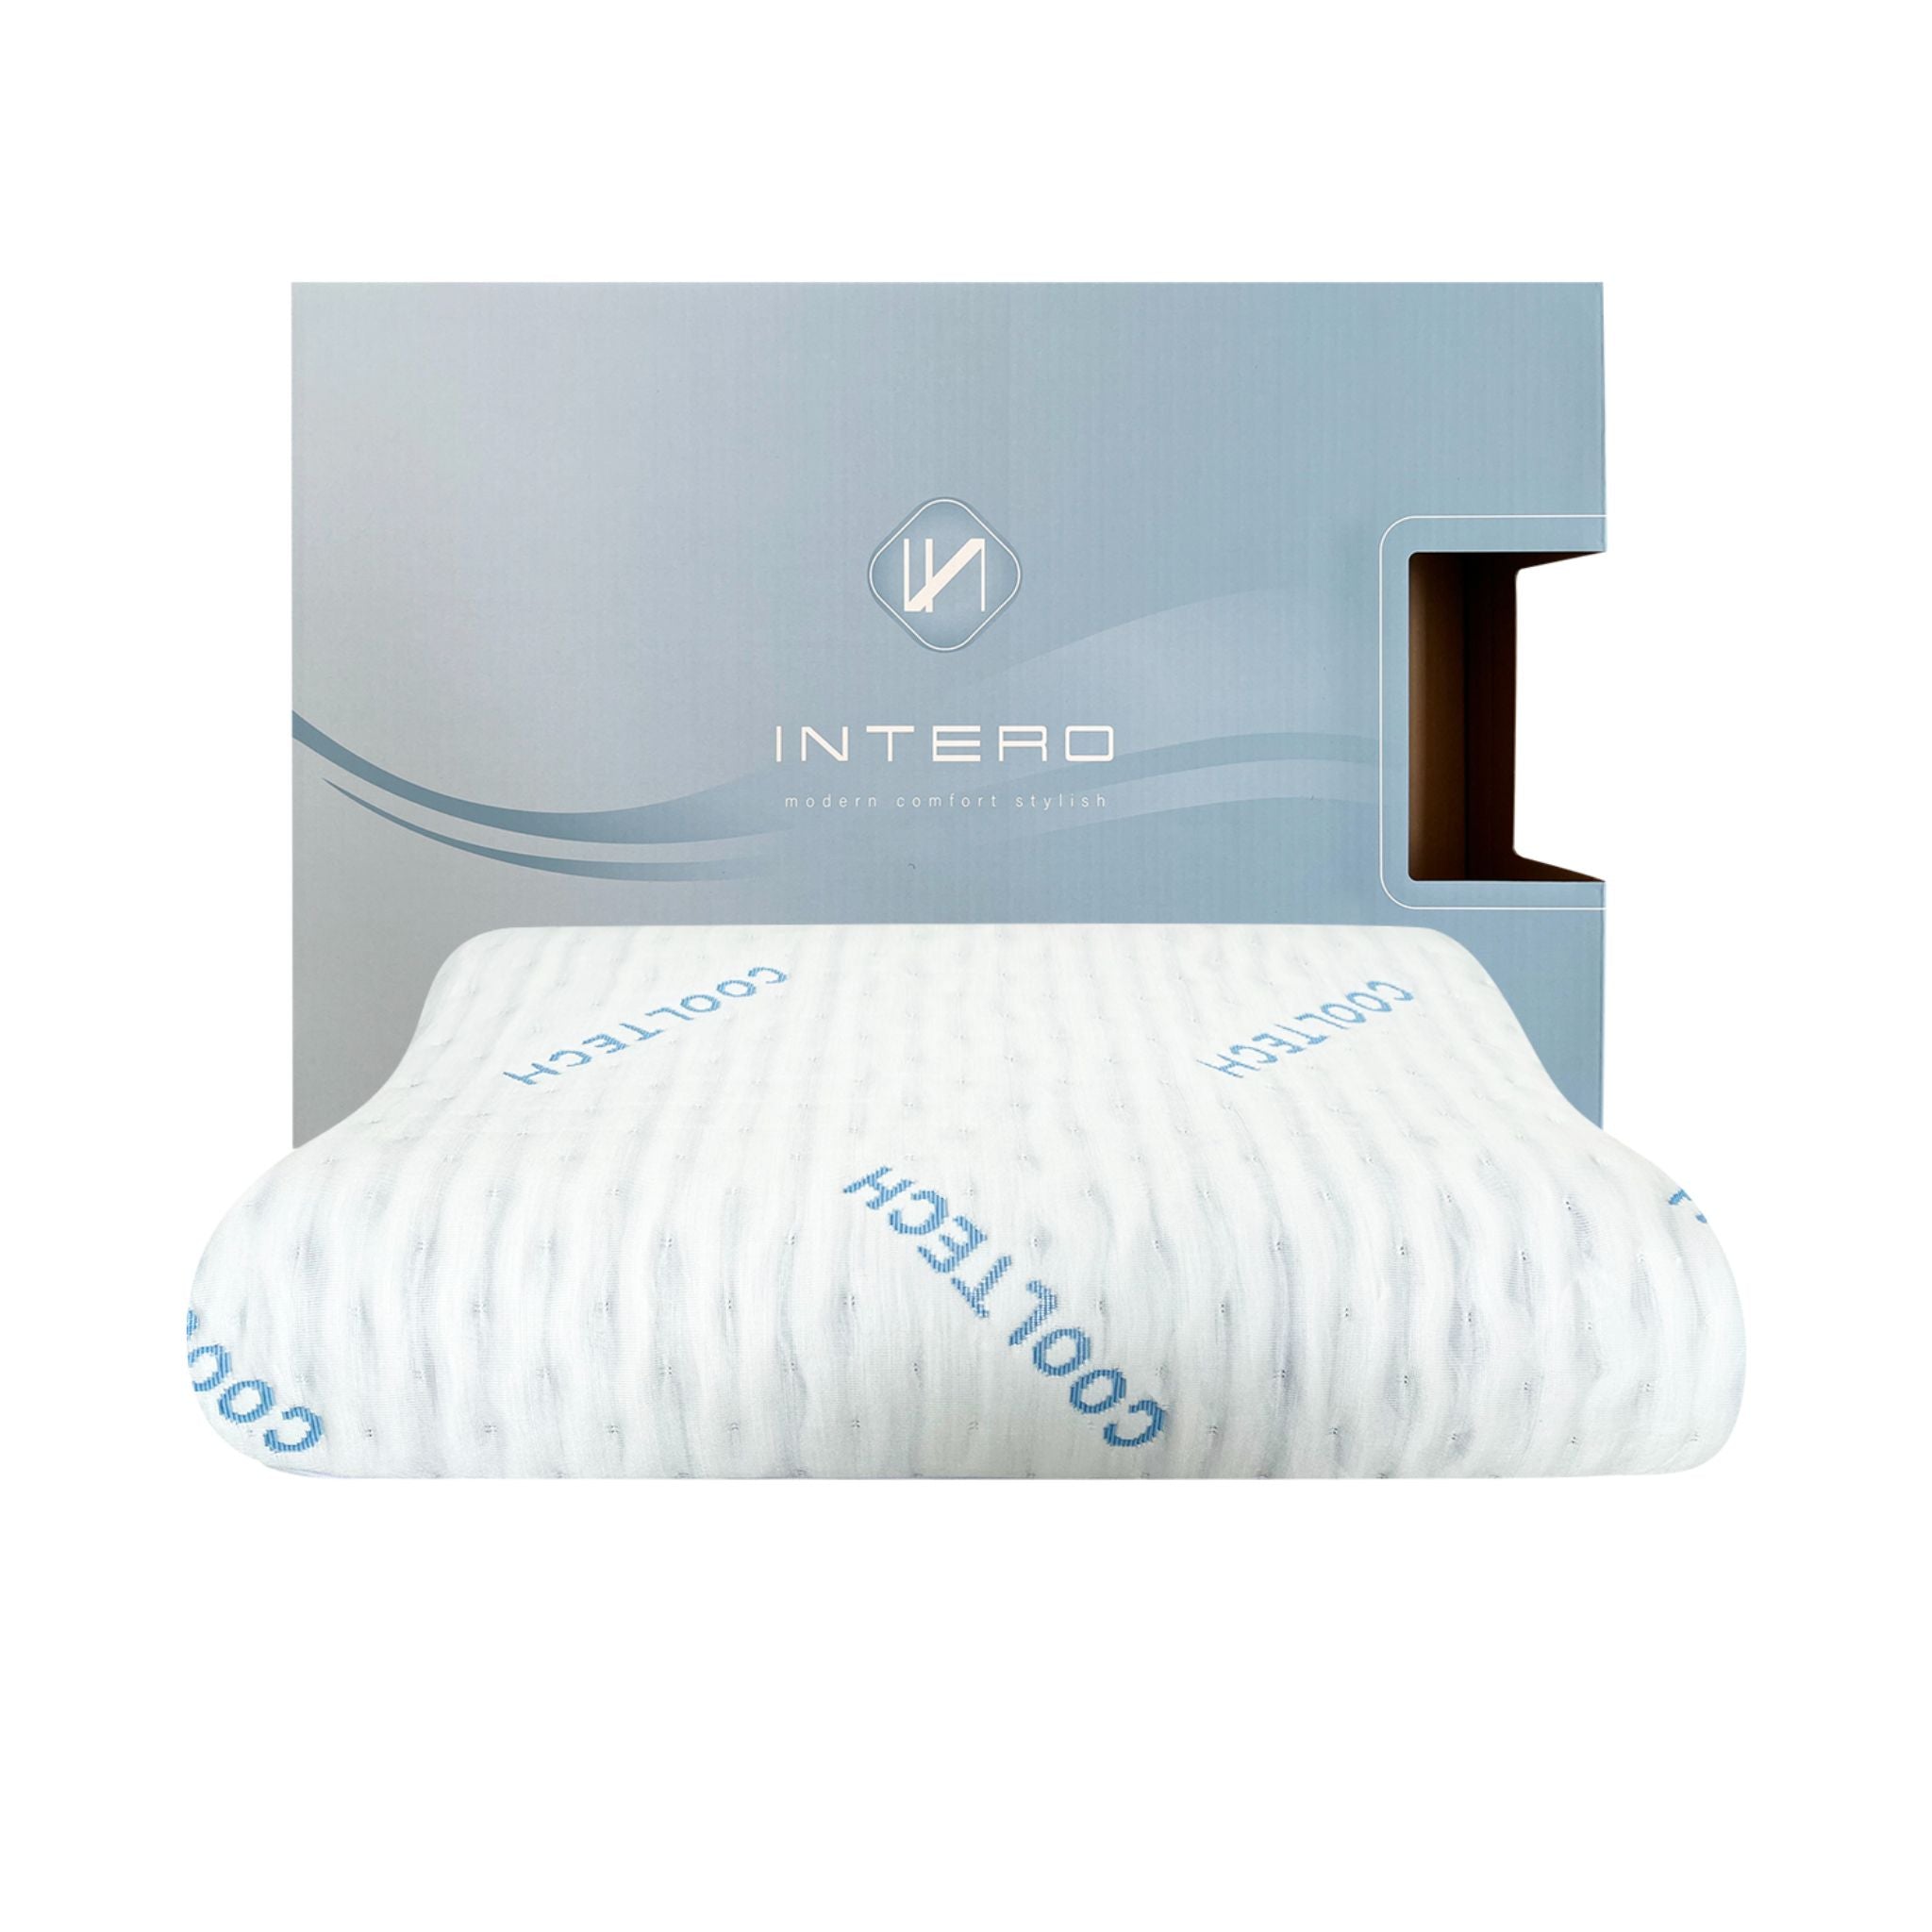 INTERO Cooltech Air-pass Charcoal Memory Foam Contour Pillow